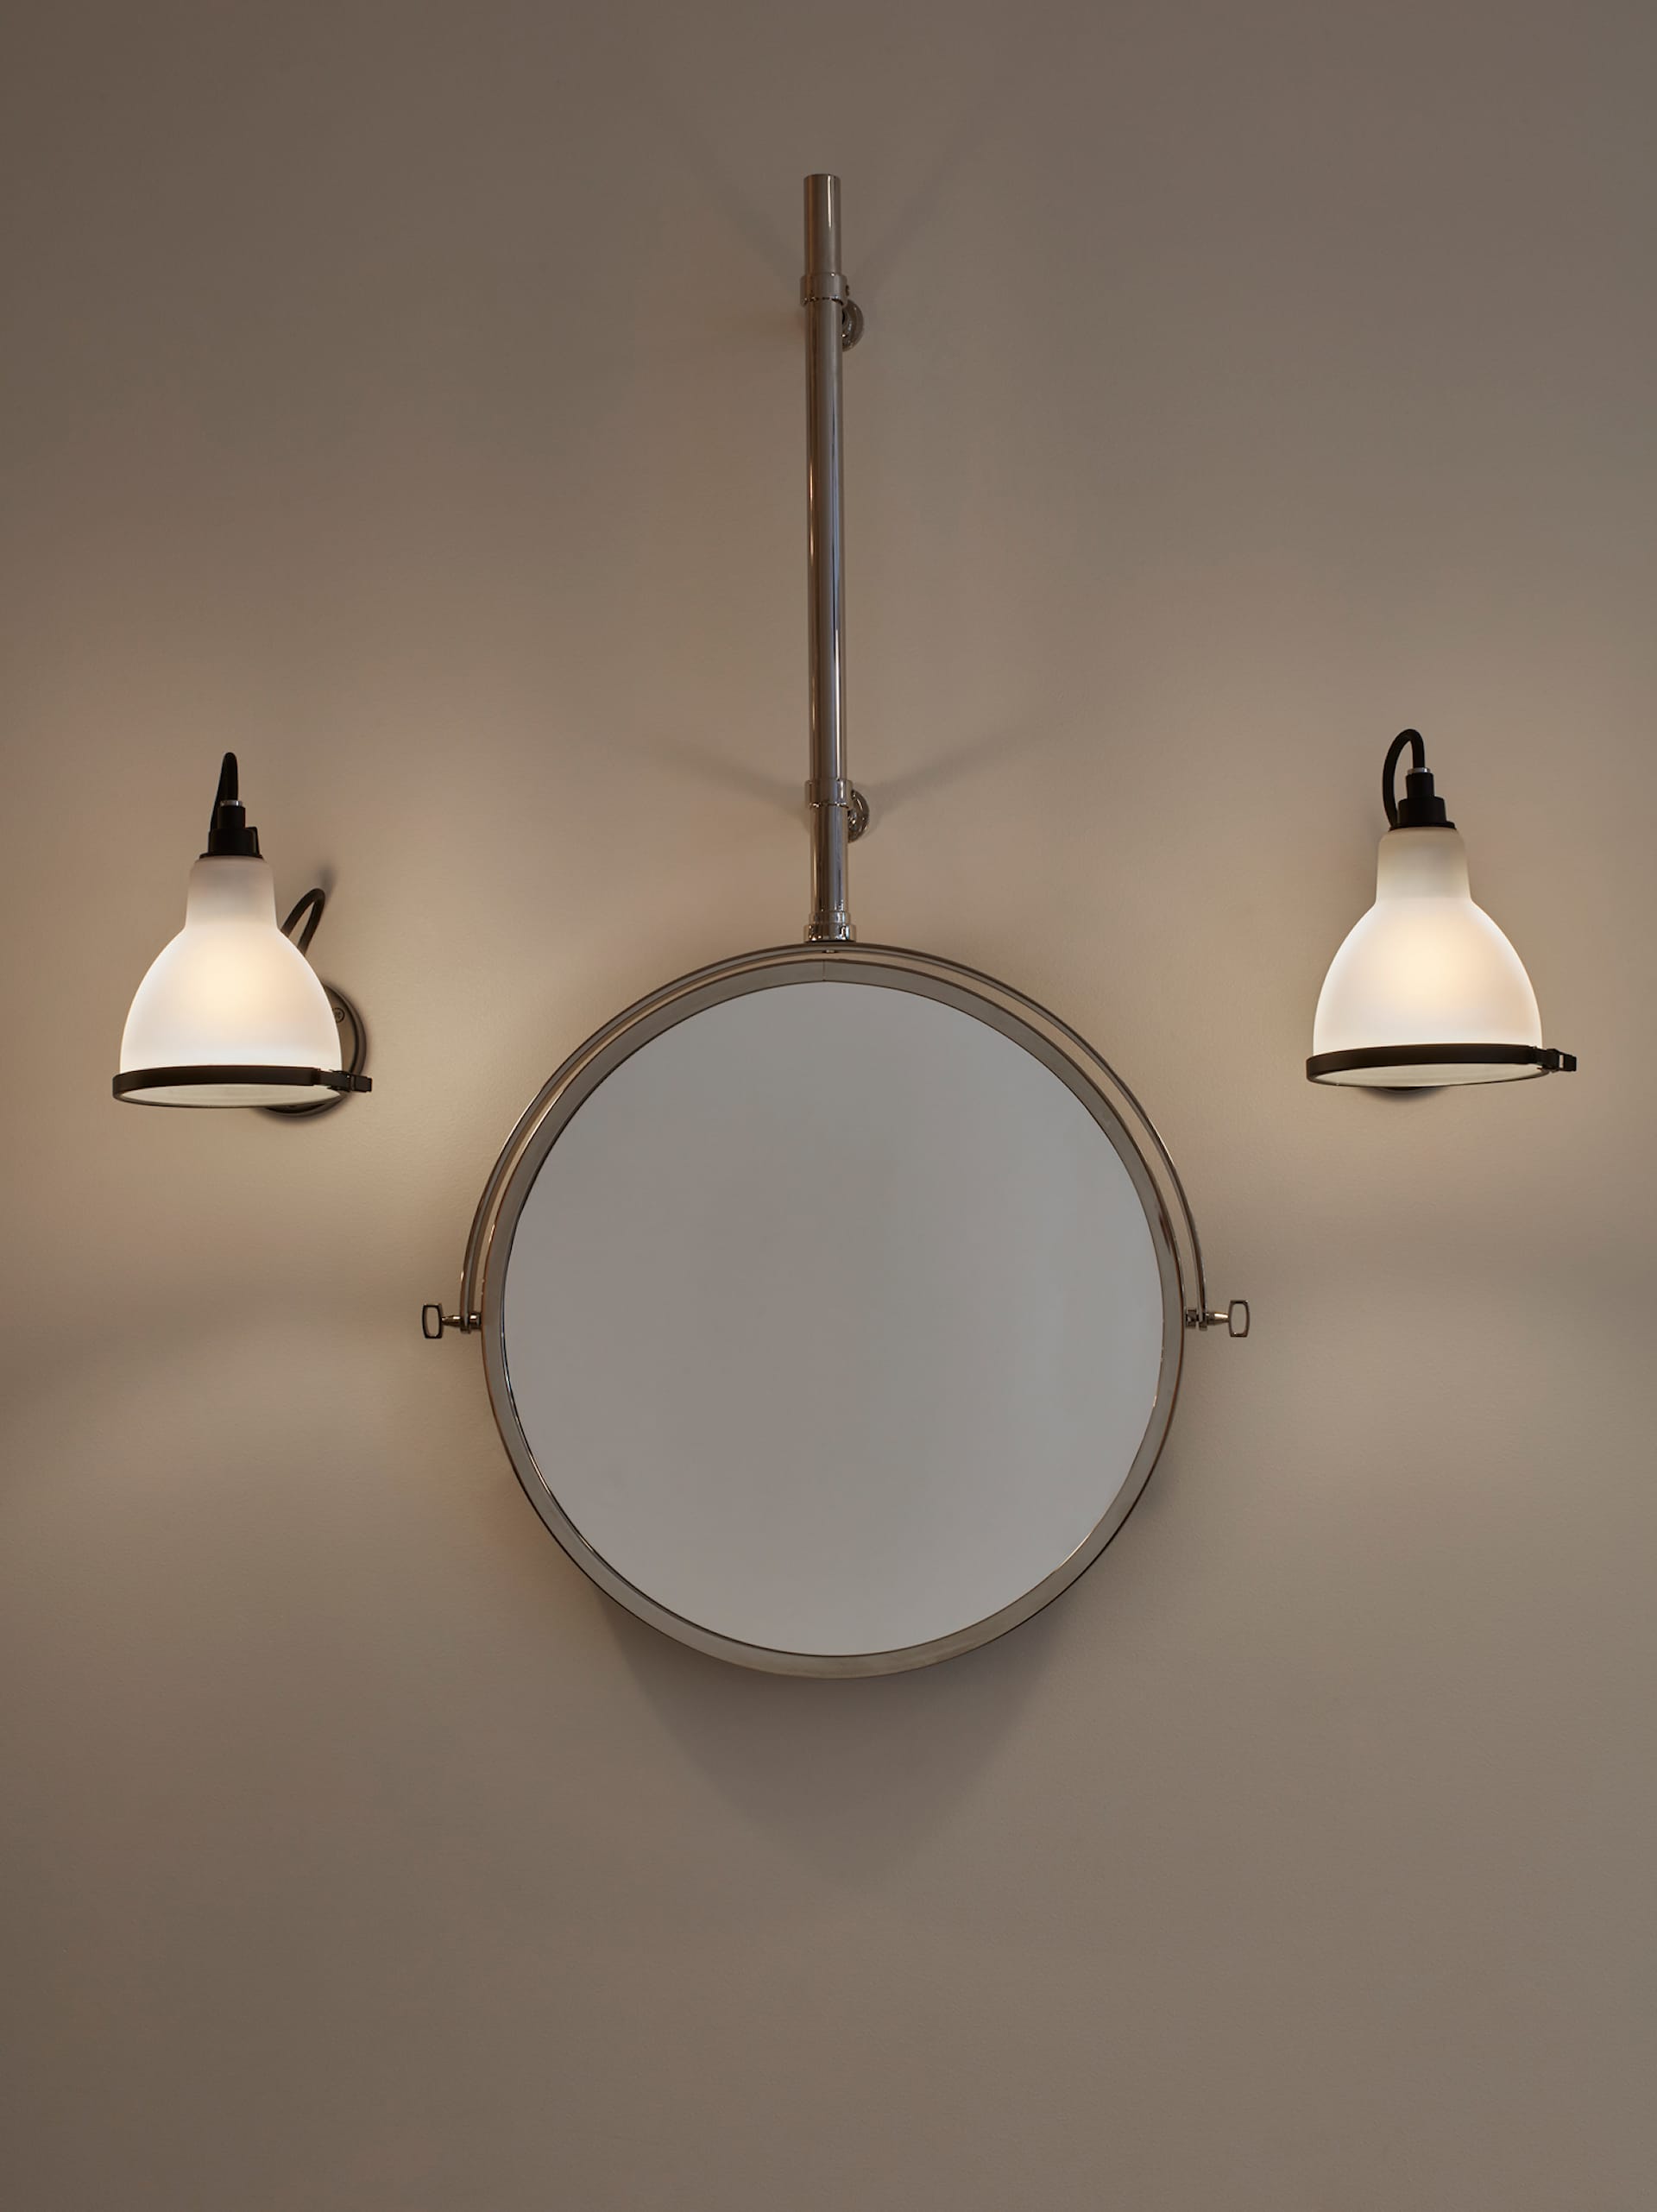 MbE Mirror - Lampe Gras by DCWéditions - NO GA